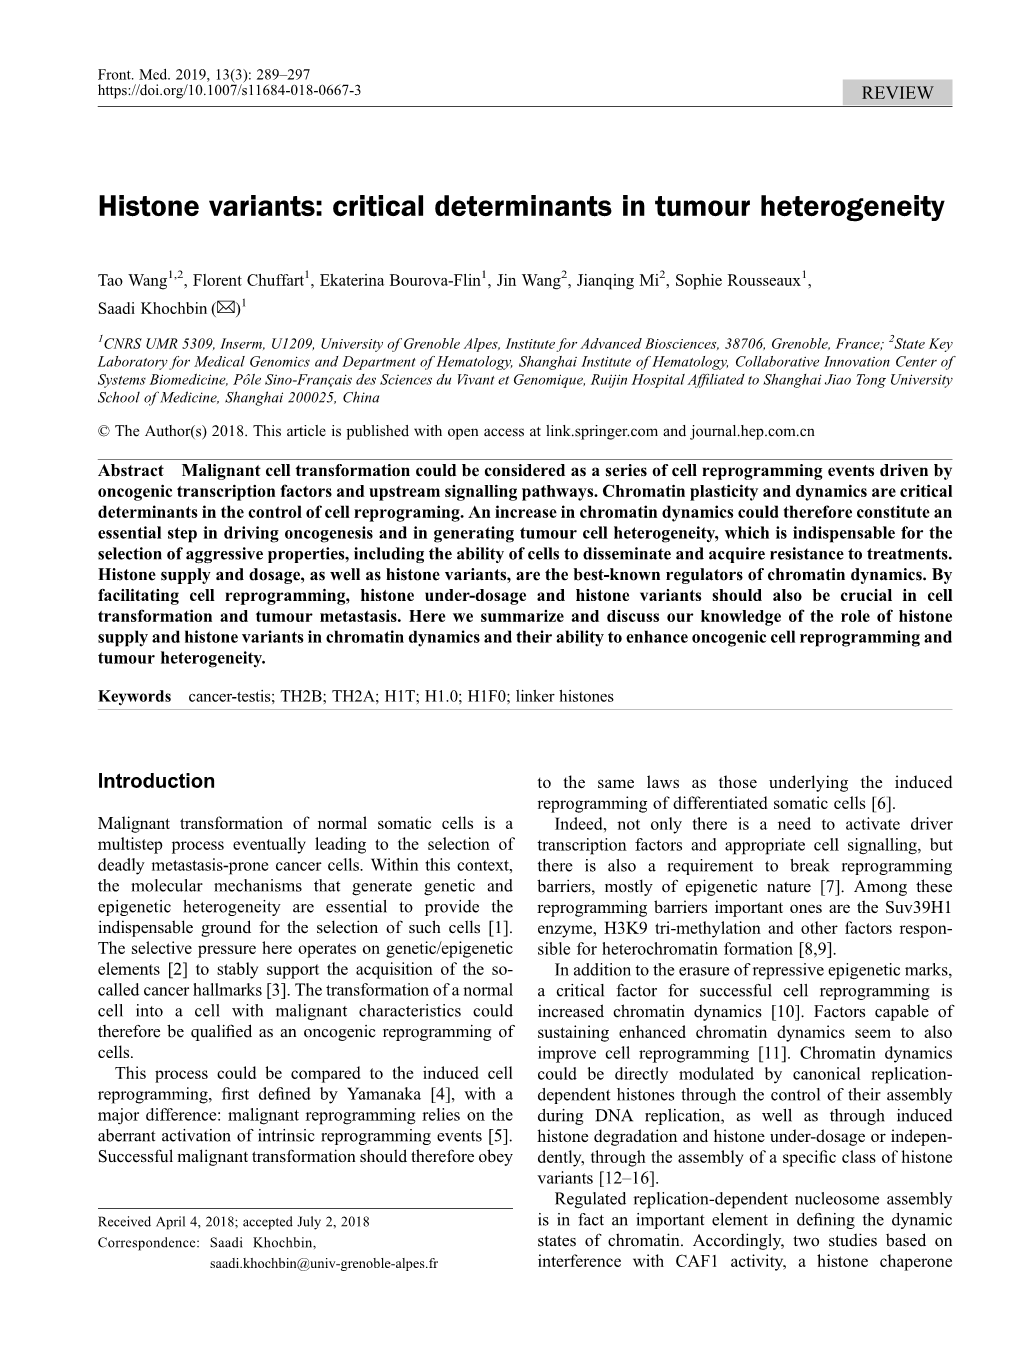 Histone Variants: Critical Determinants in Tumour Heterogeneity